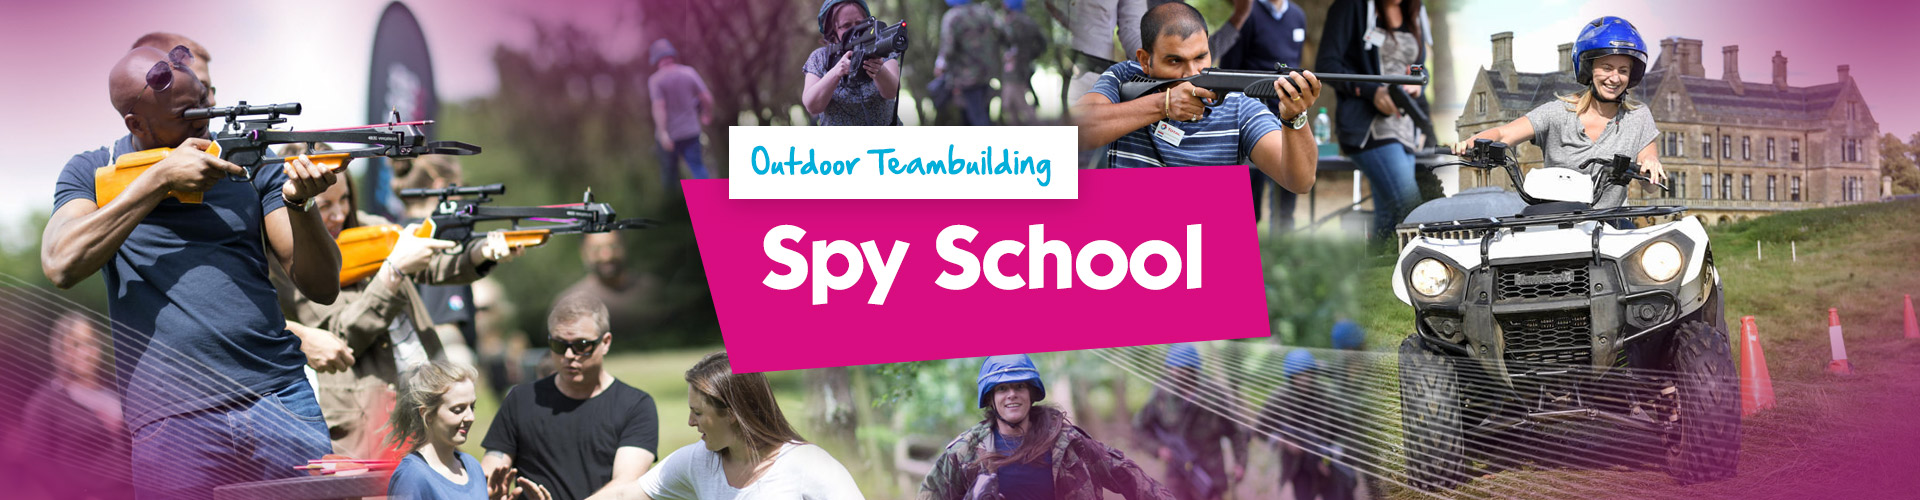 Teambuilding | Spy School